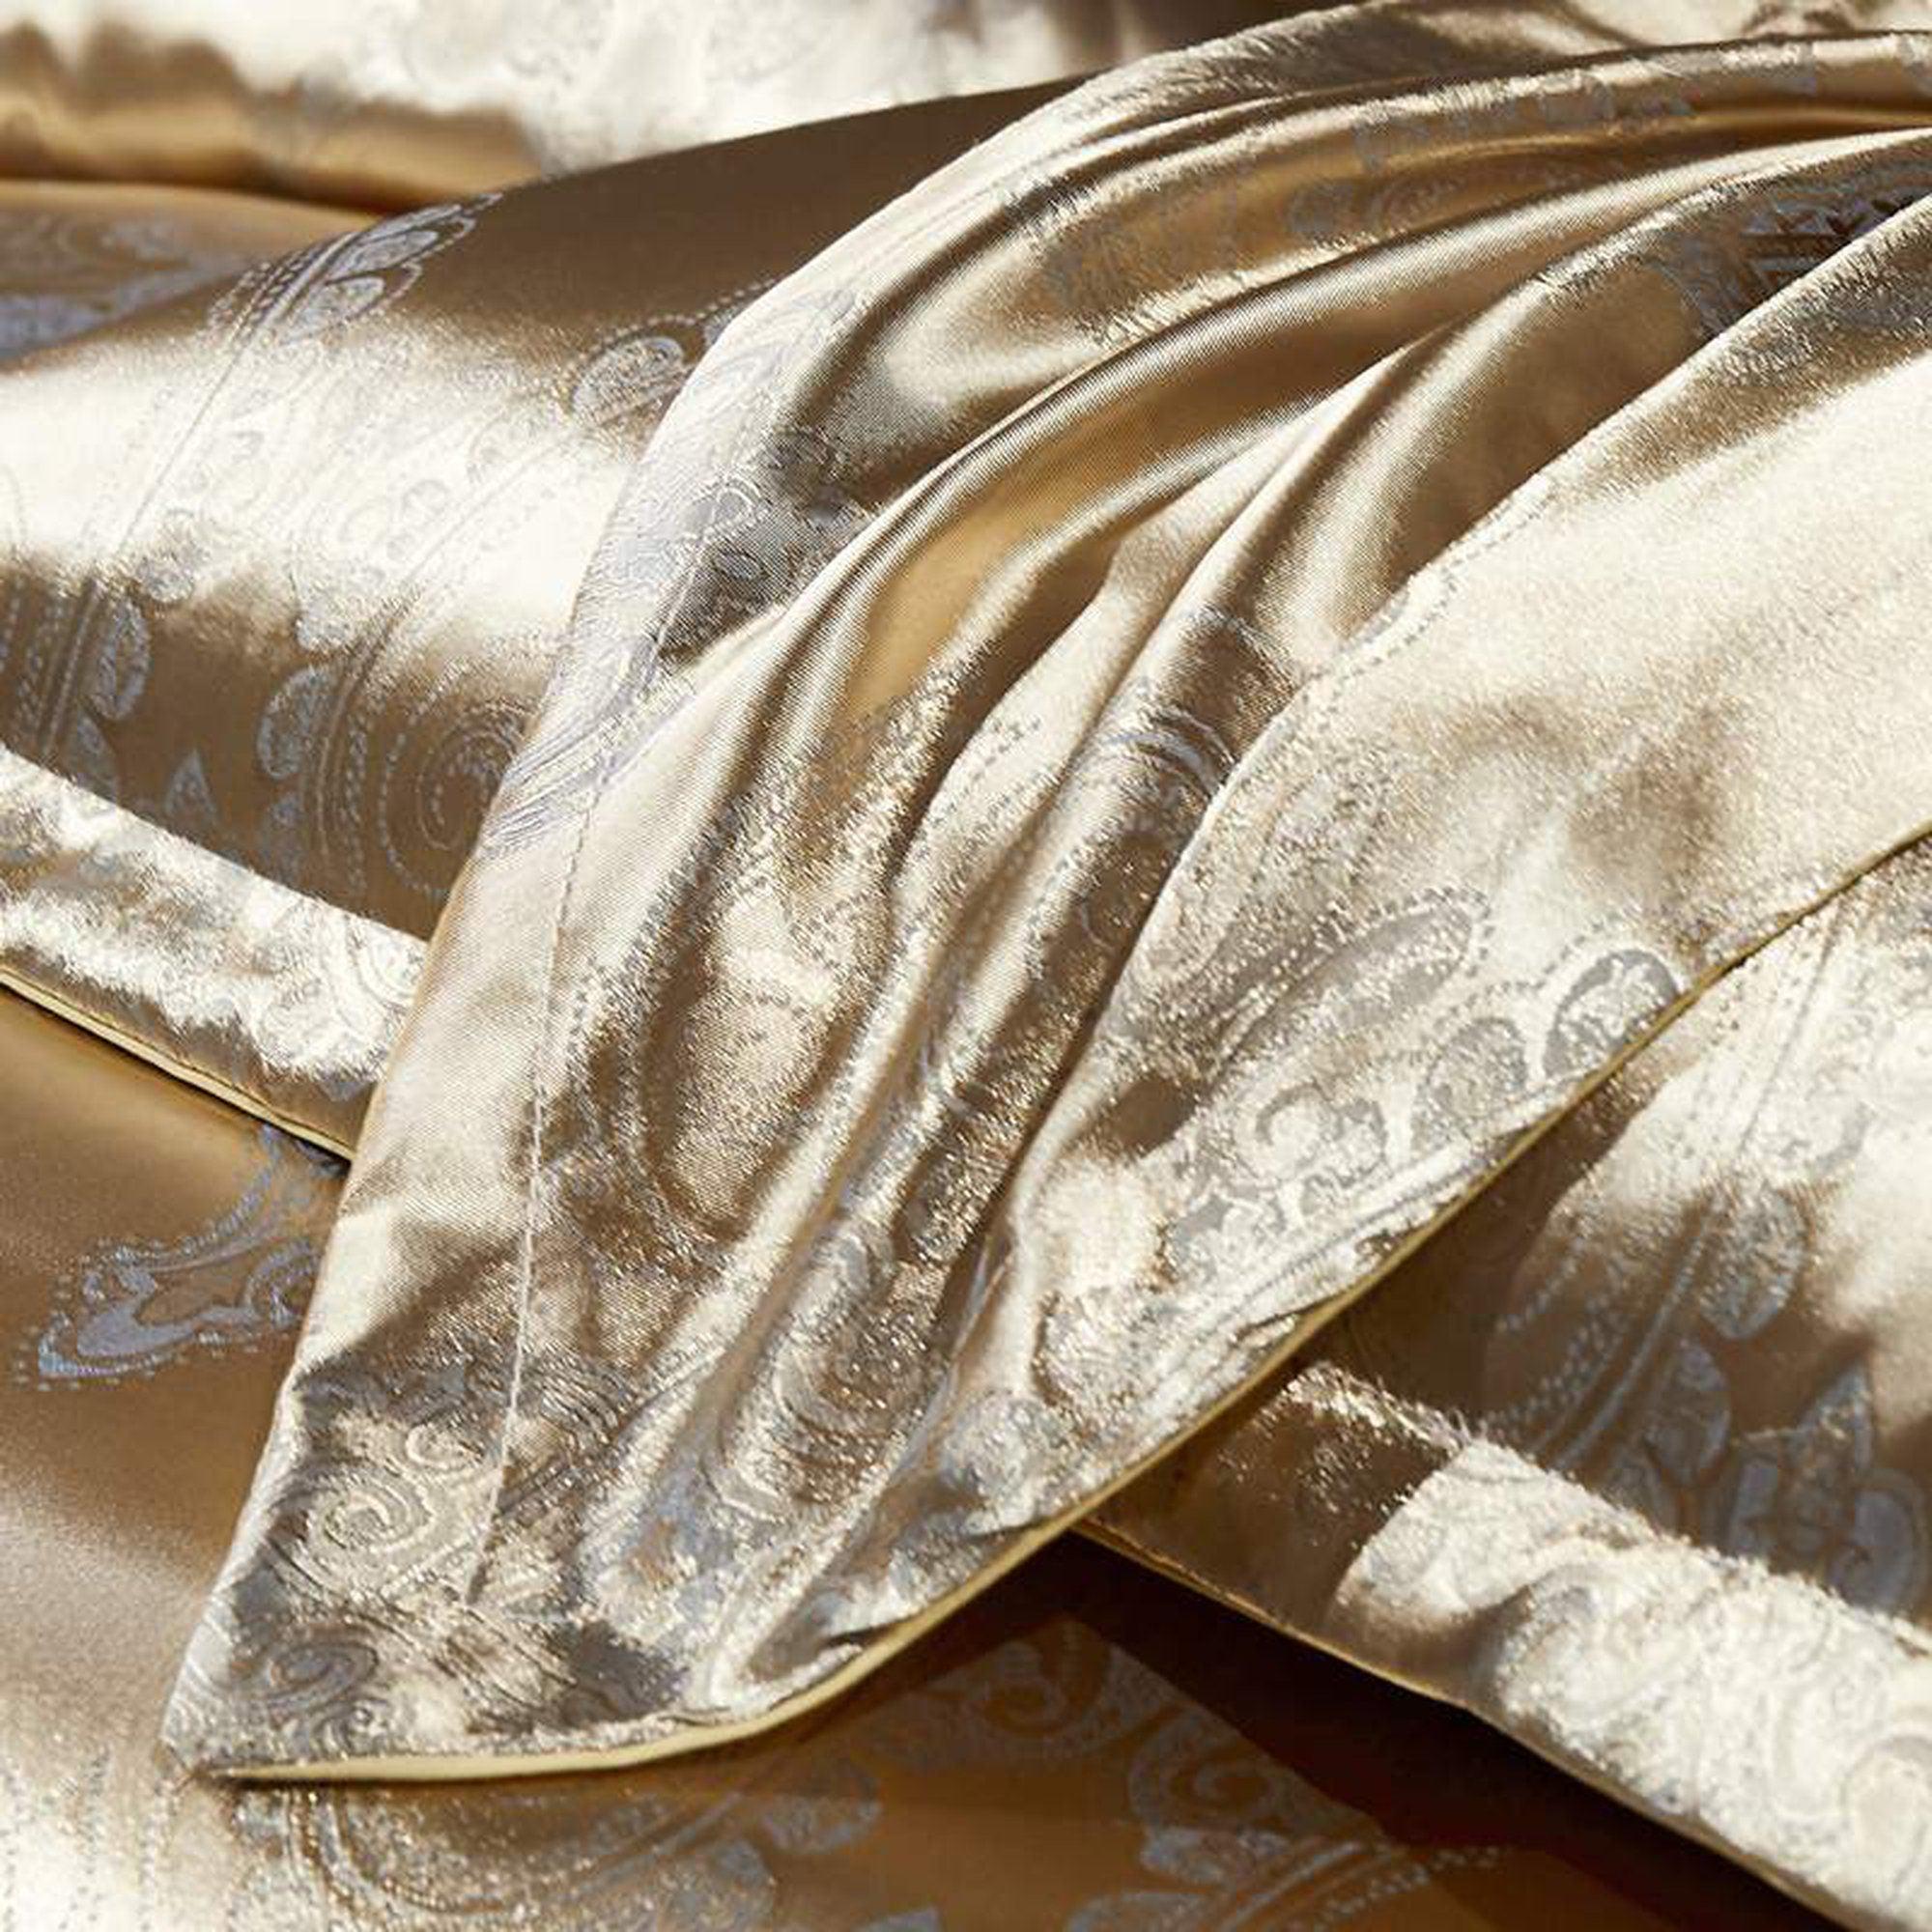 daintyduvet Luxury Duvet Cover Set Gold, Jacquard Fabric Aesthetic Bedding Decorative, Embroidered Bedding Set